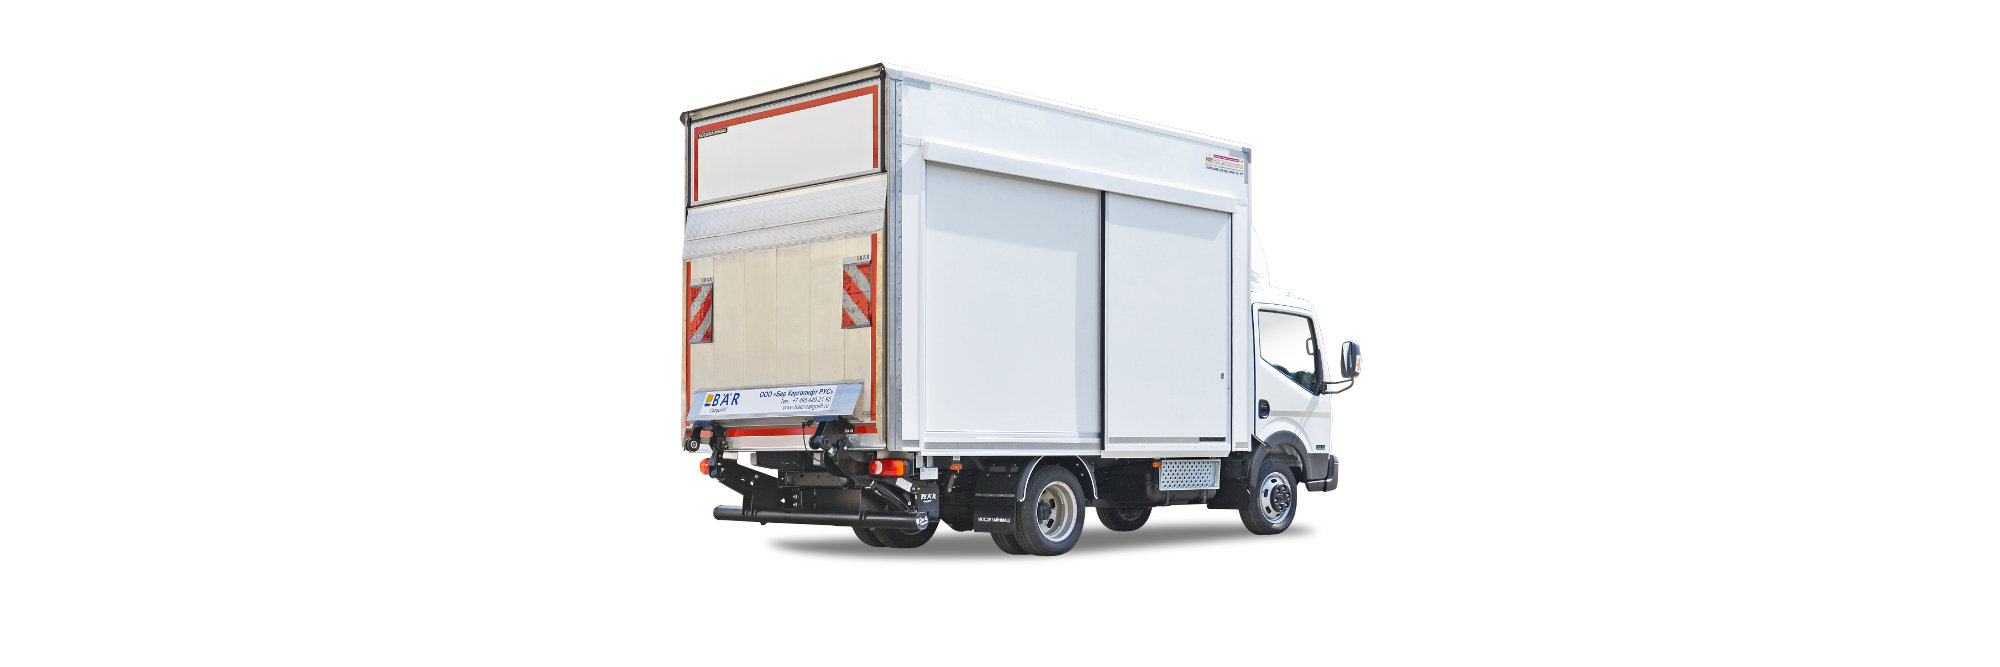 Decopan Commercial Vehicle (Ticari Araç) CTP levha gıda dışı lojistik ve dağıtım treyler, kamyon, kamyonet, van kasa üretimi